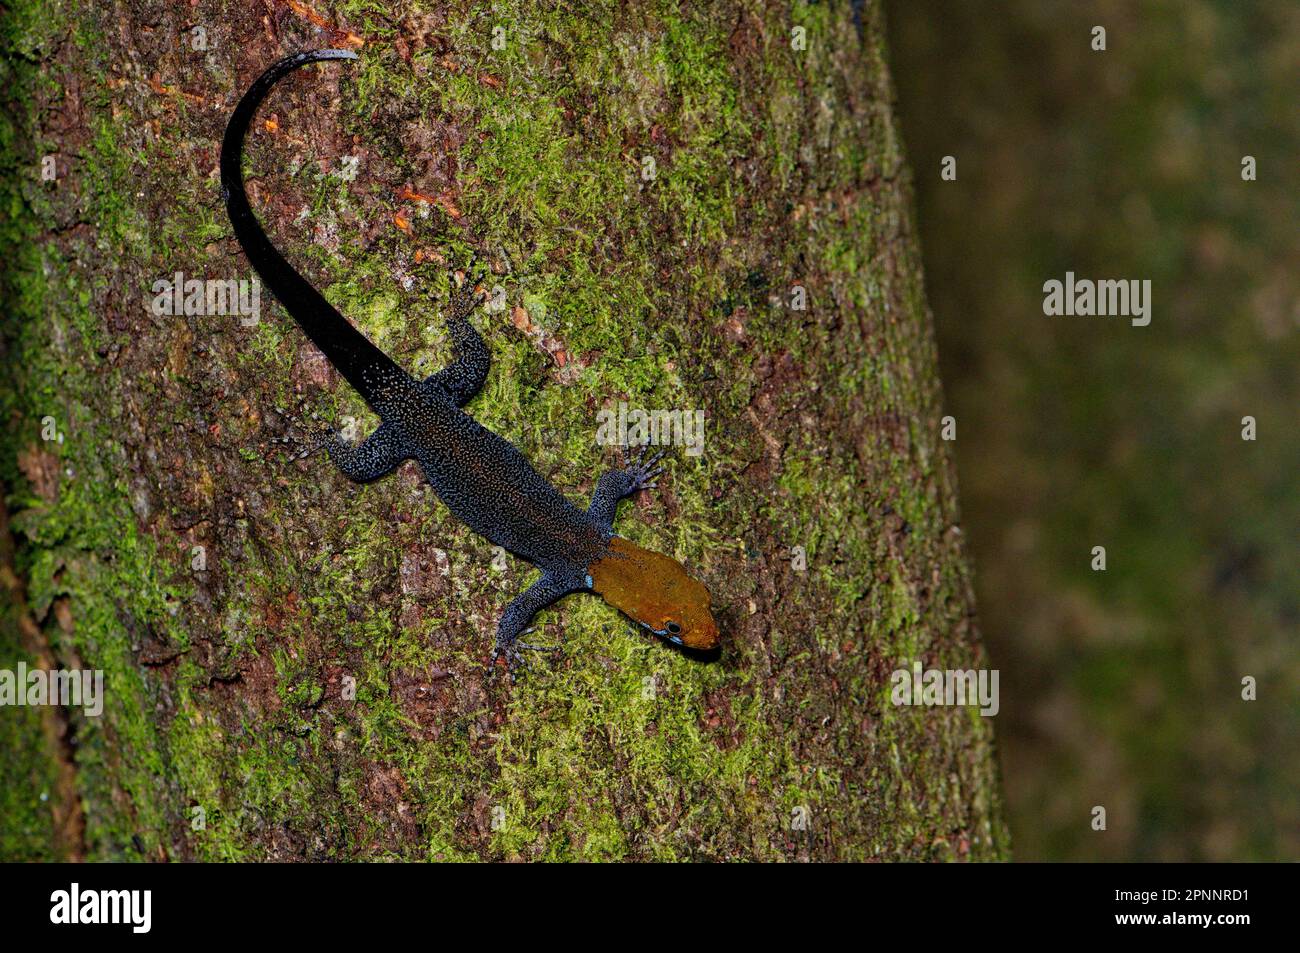 Yellow-headed gecko, Costa Rica Stock Photo